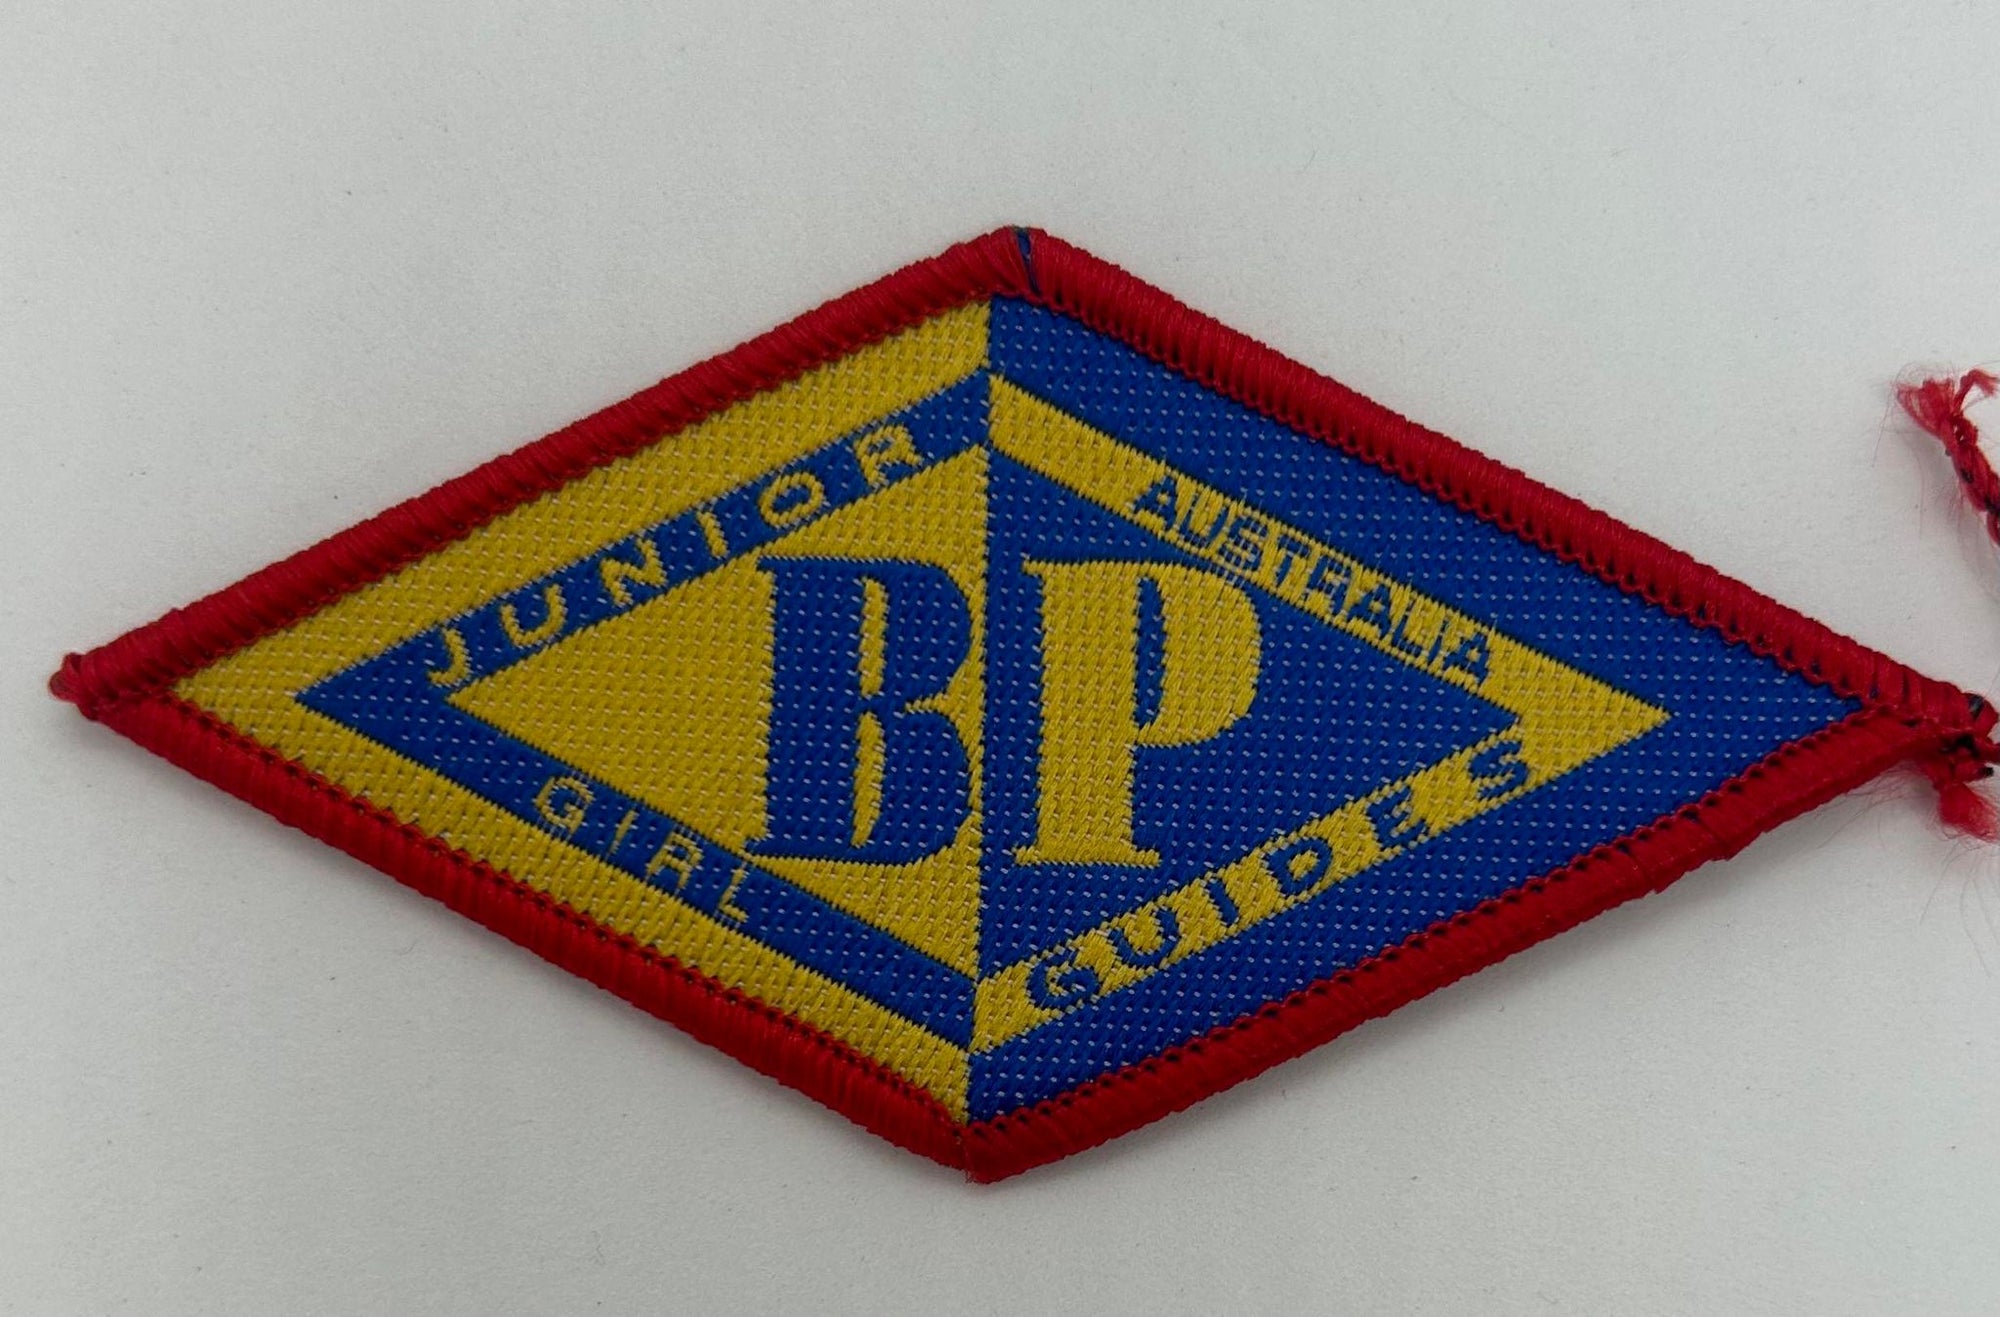 a diamond shaped cloth badge with the JBP logo